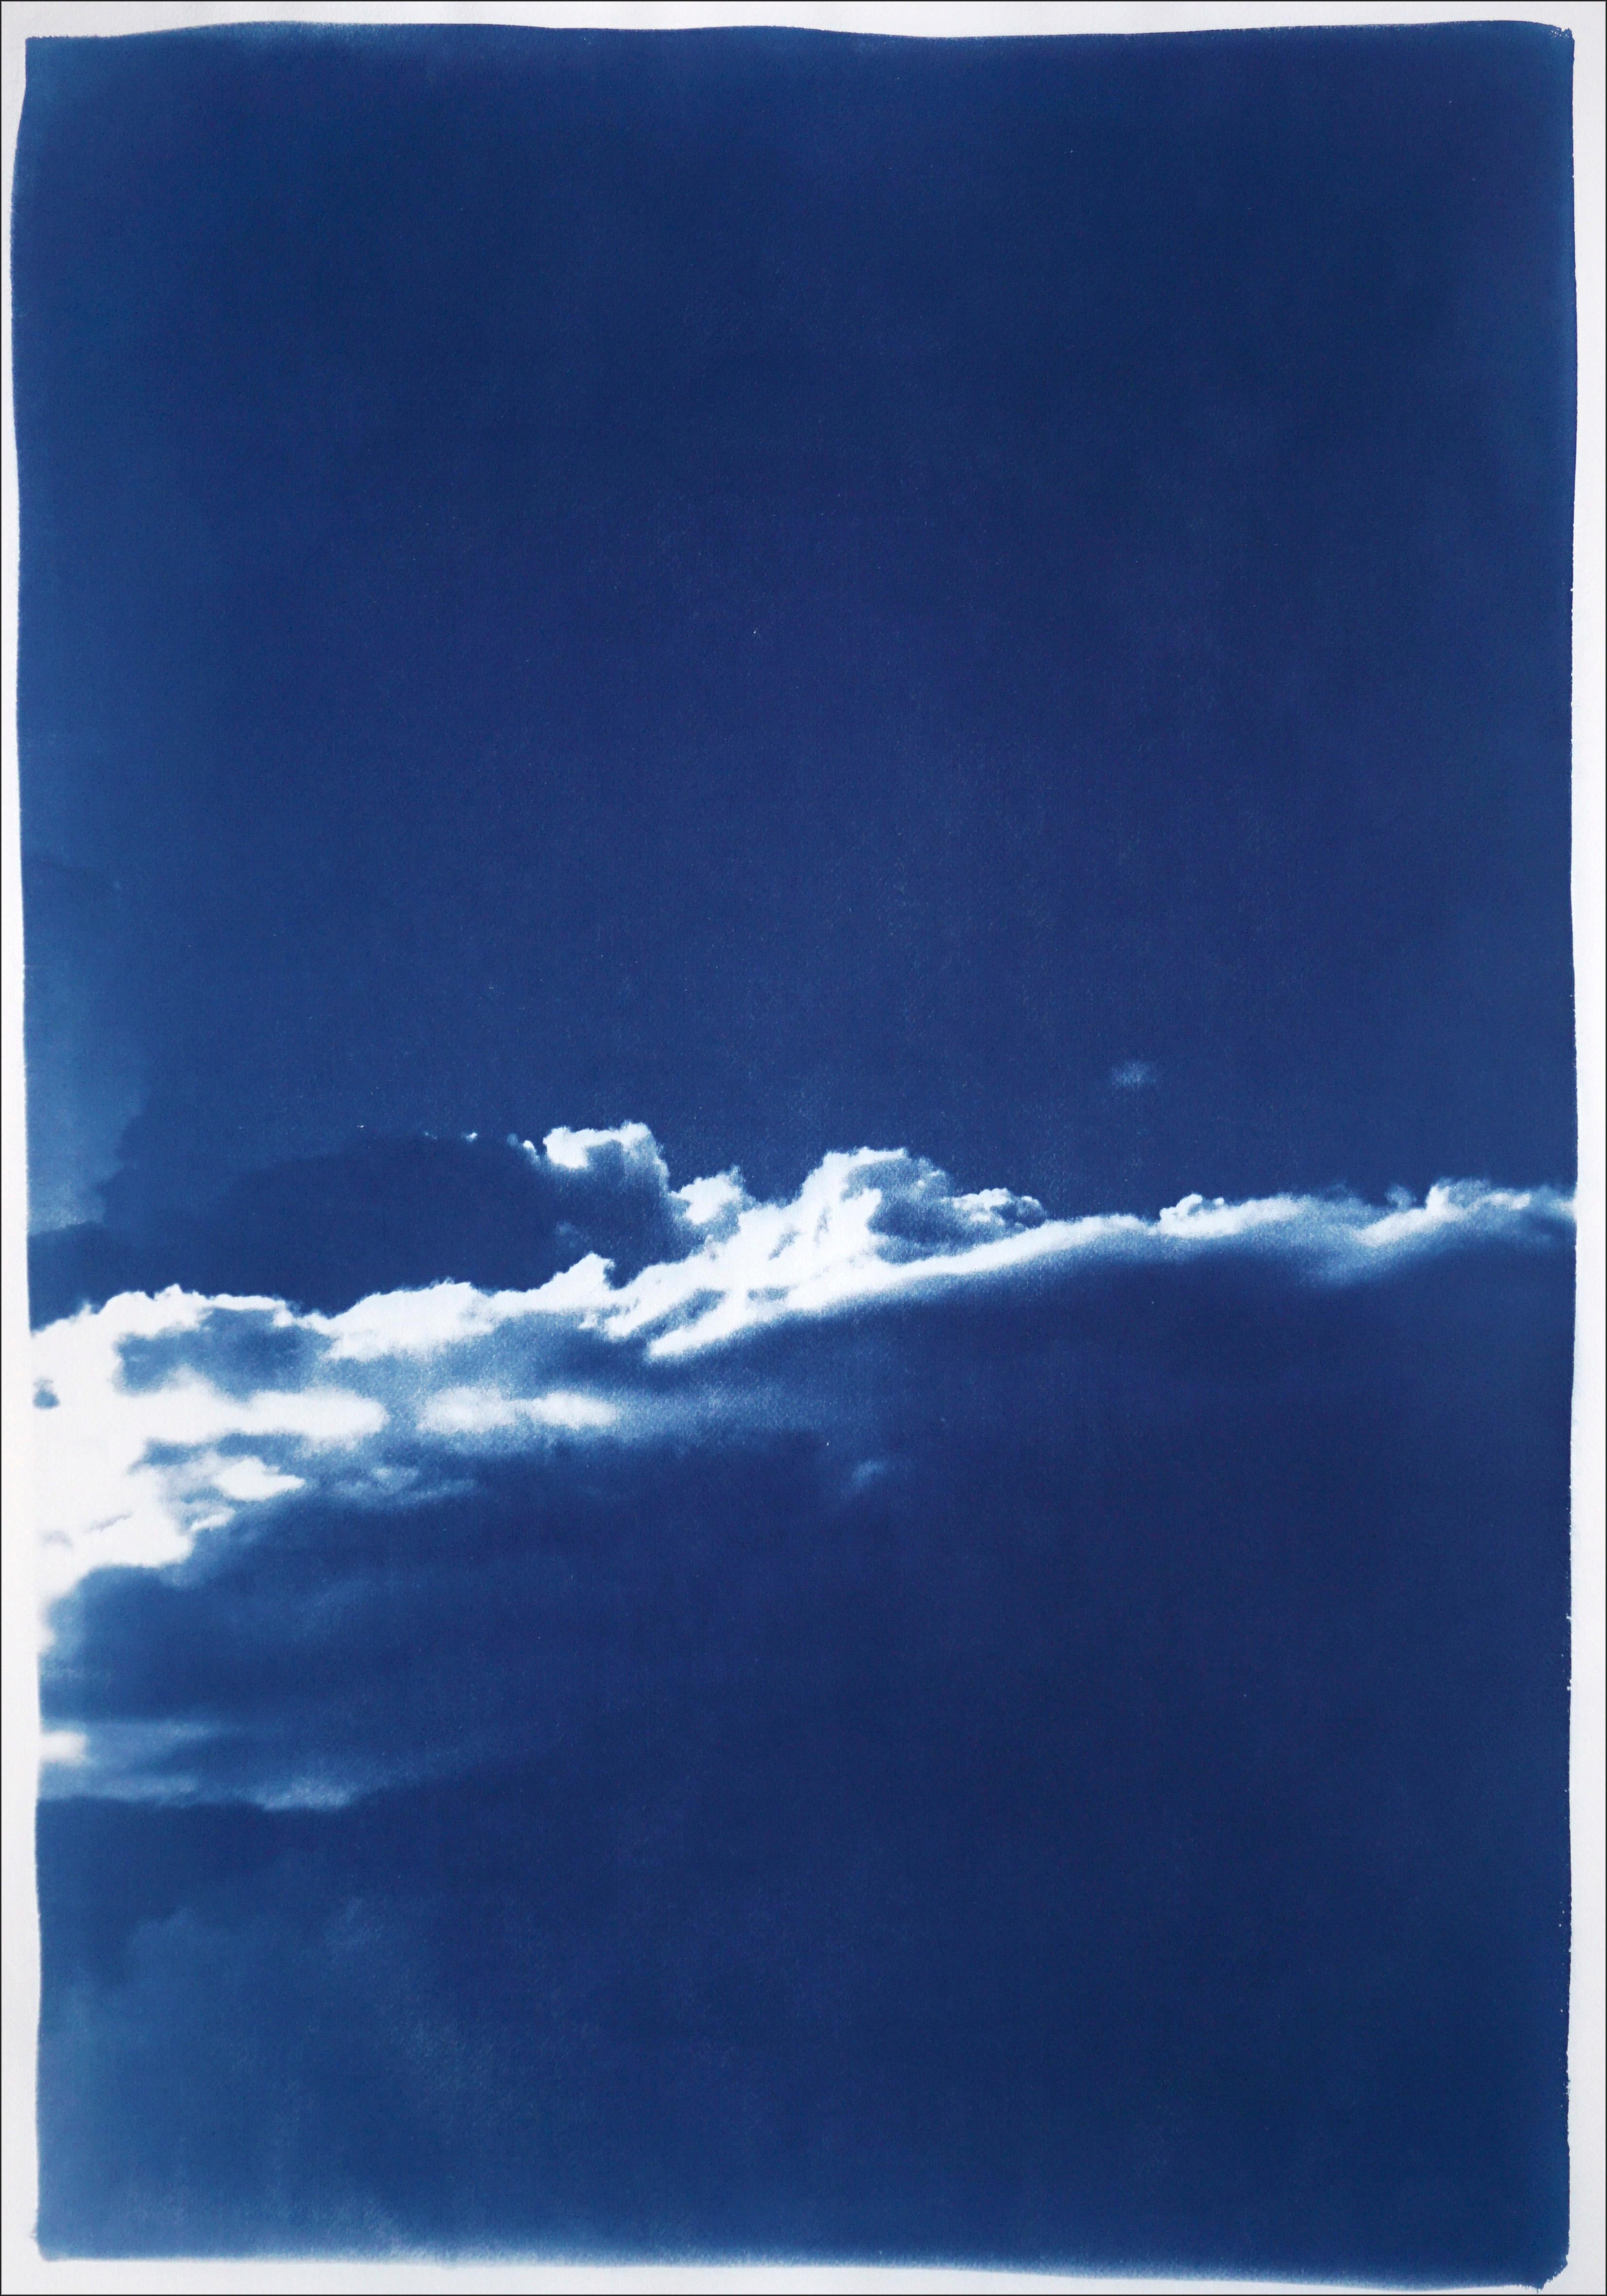 Blue Tones Triptych of Serene Cloudy Sky, Handmade Cyanotype Print on Paper 2021 1